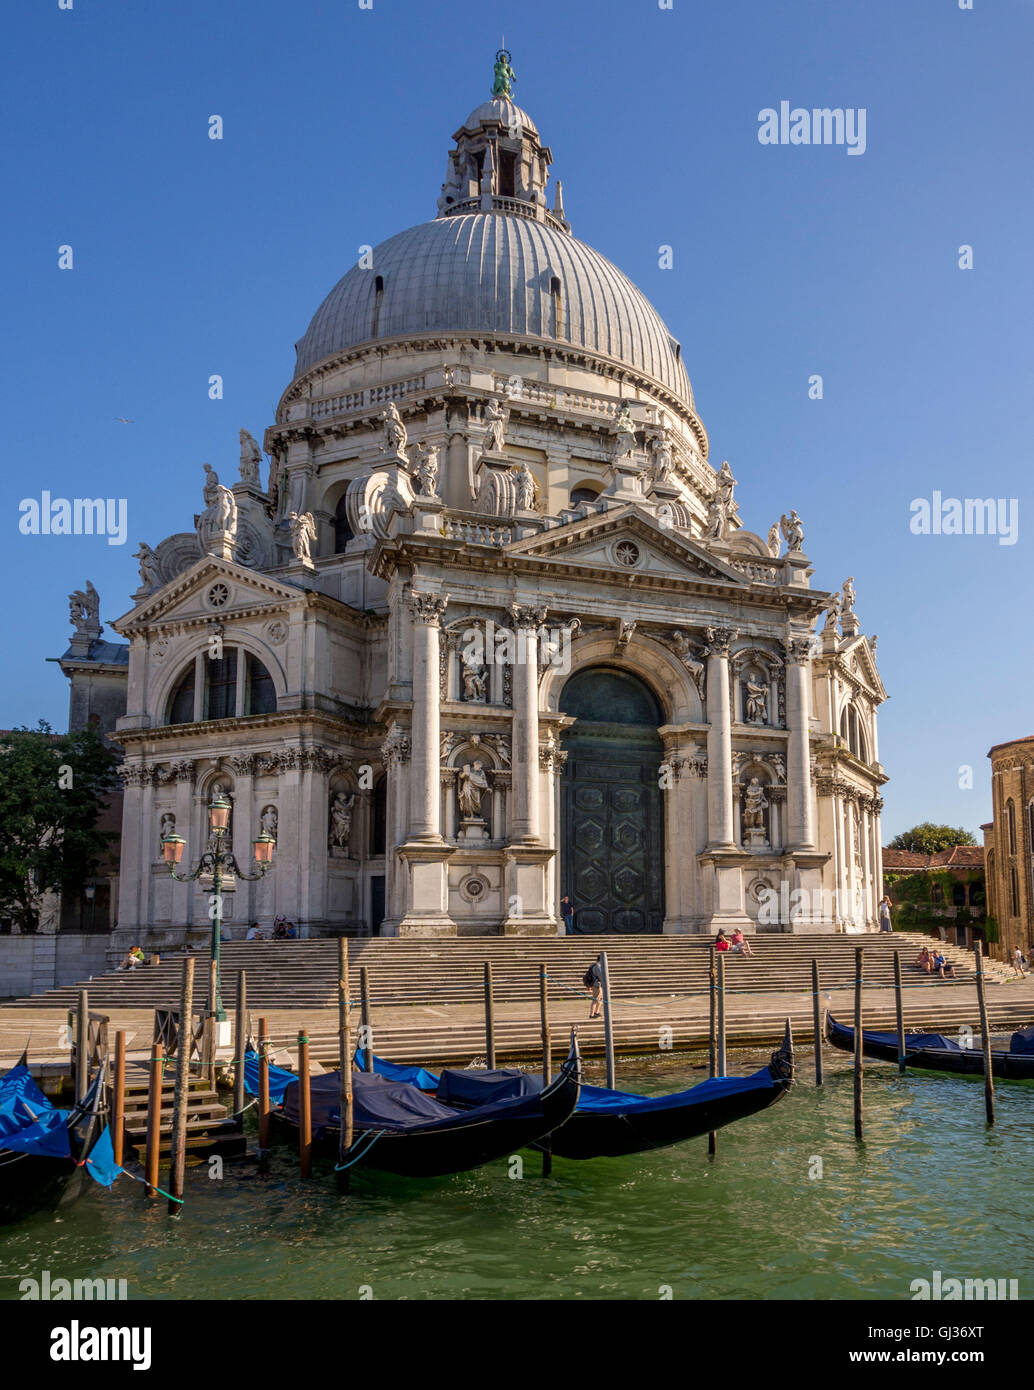 Festgemachten Gondeln außerhalb der Kanal gelegenen Kirche Santa Maria della Salute. Venedig Italien. Stockfoto